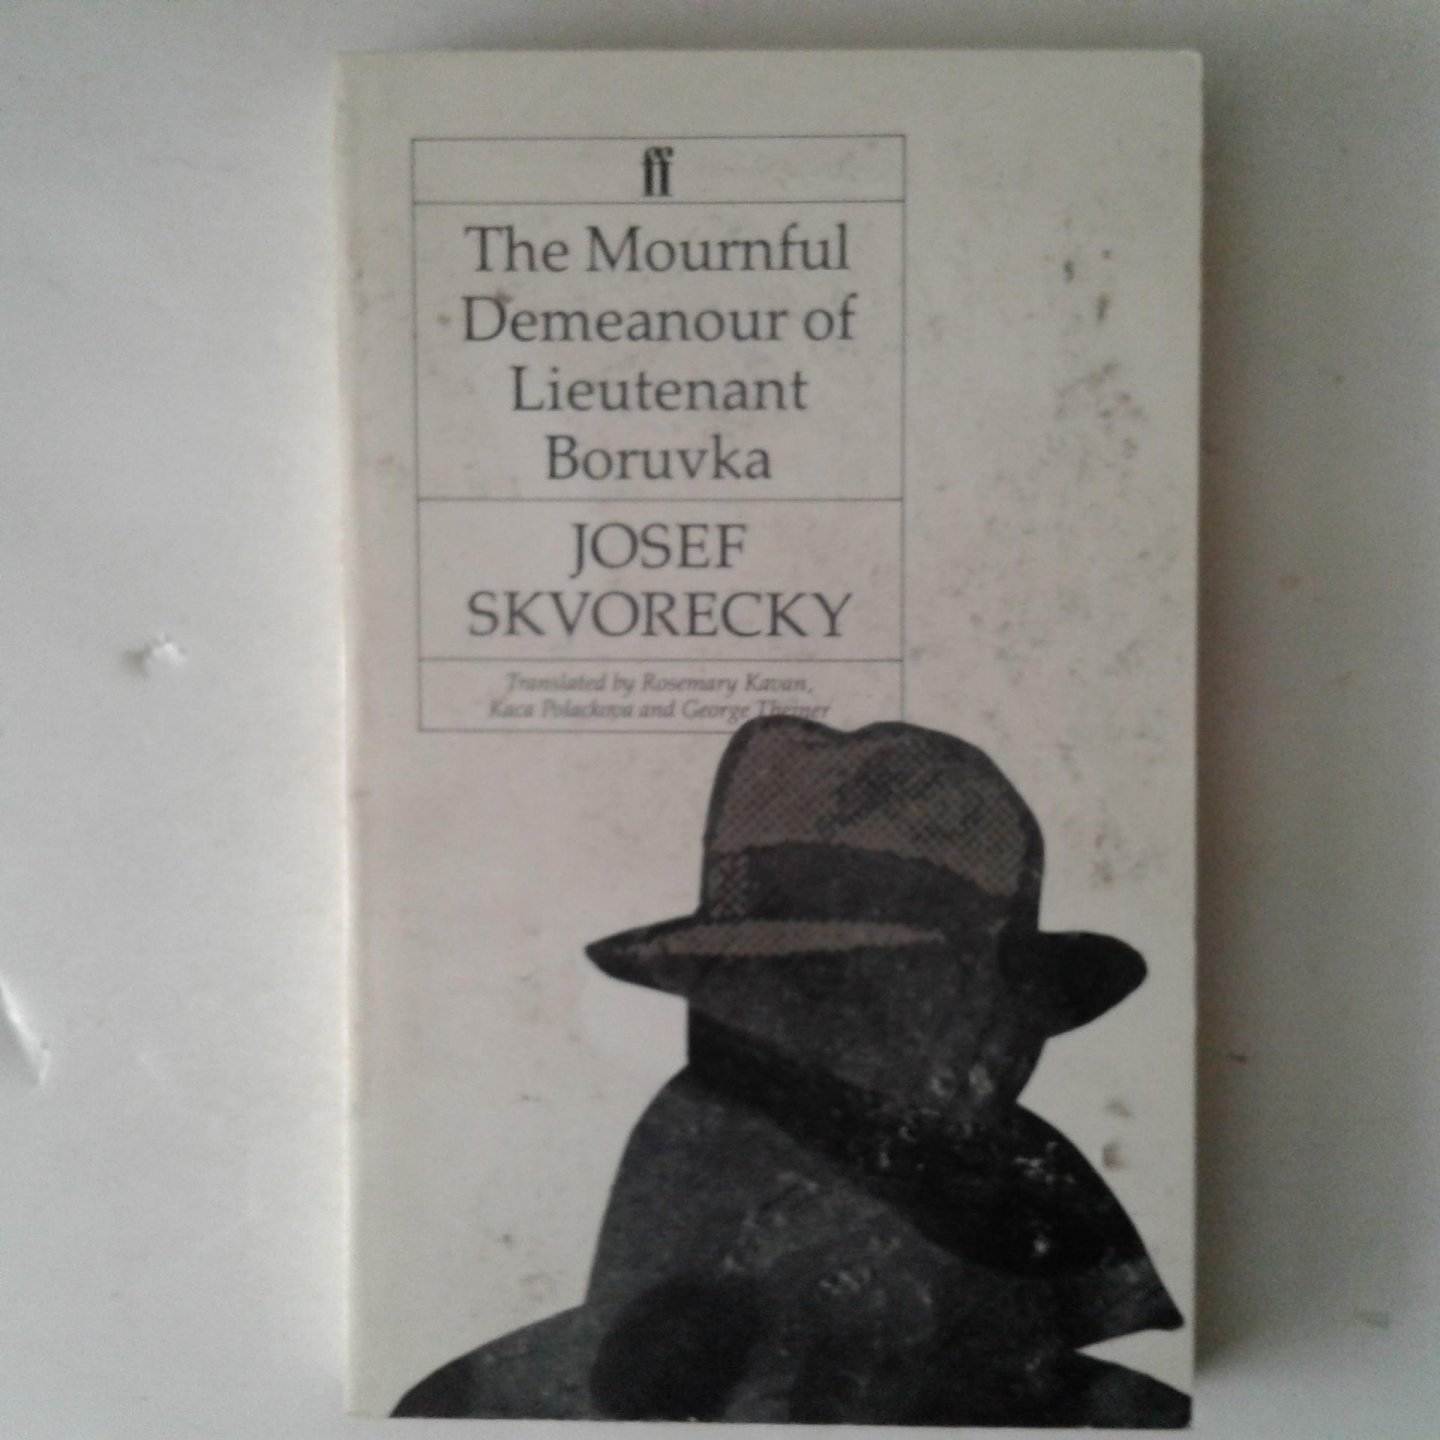 Skvorecky, Josef - The Mournful Demeanour of Lieutenant Boruvka